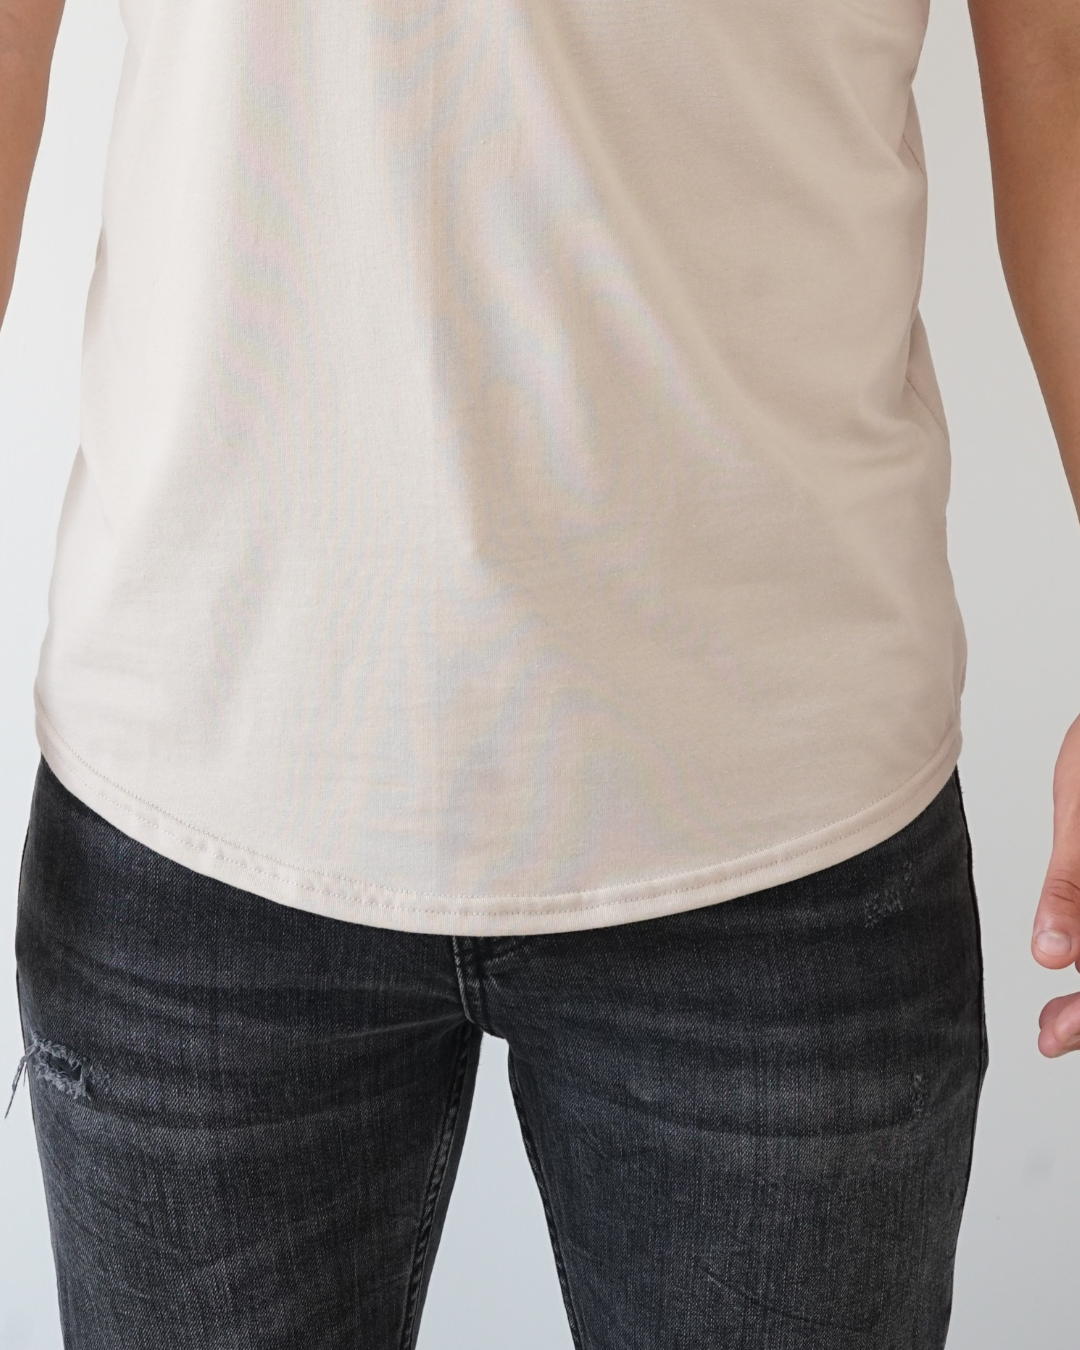 Sand T-shirt - Short Sleeve Henley Neck Curved Bottom